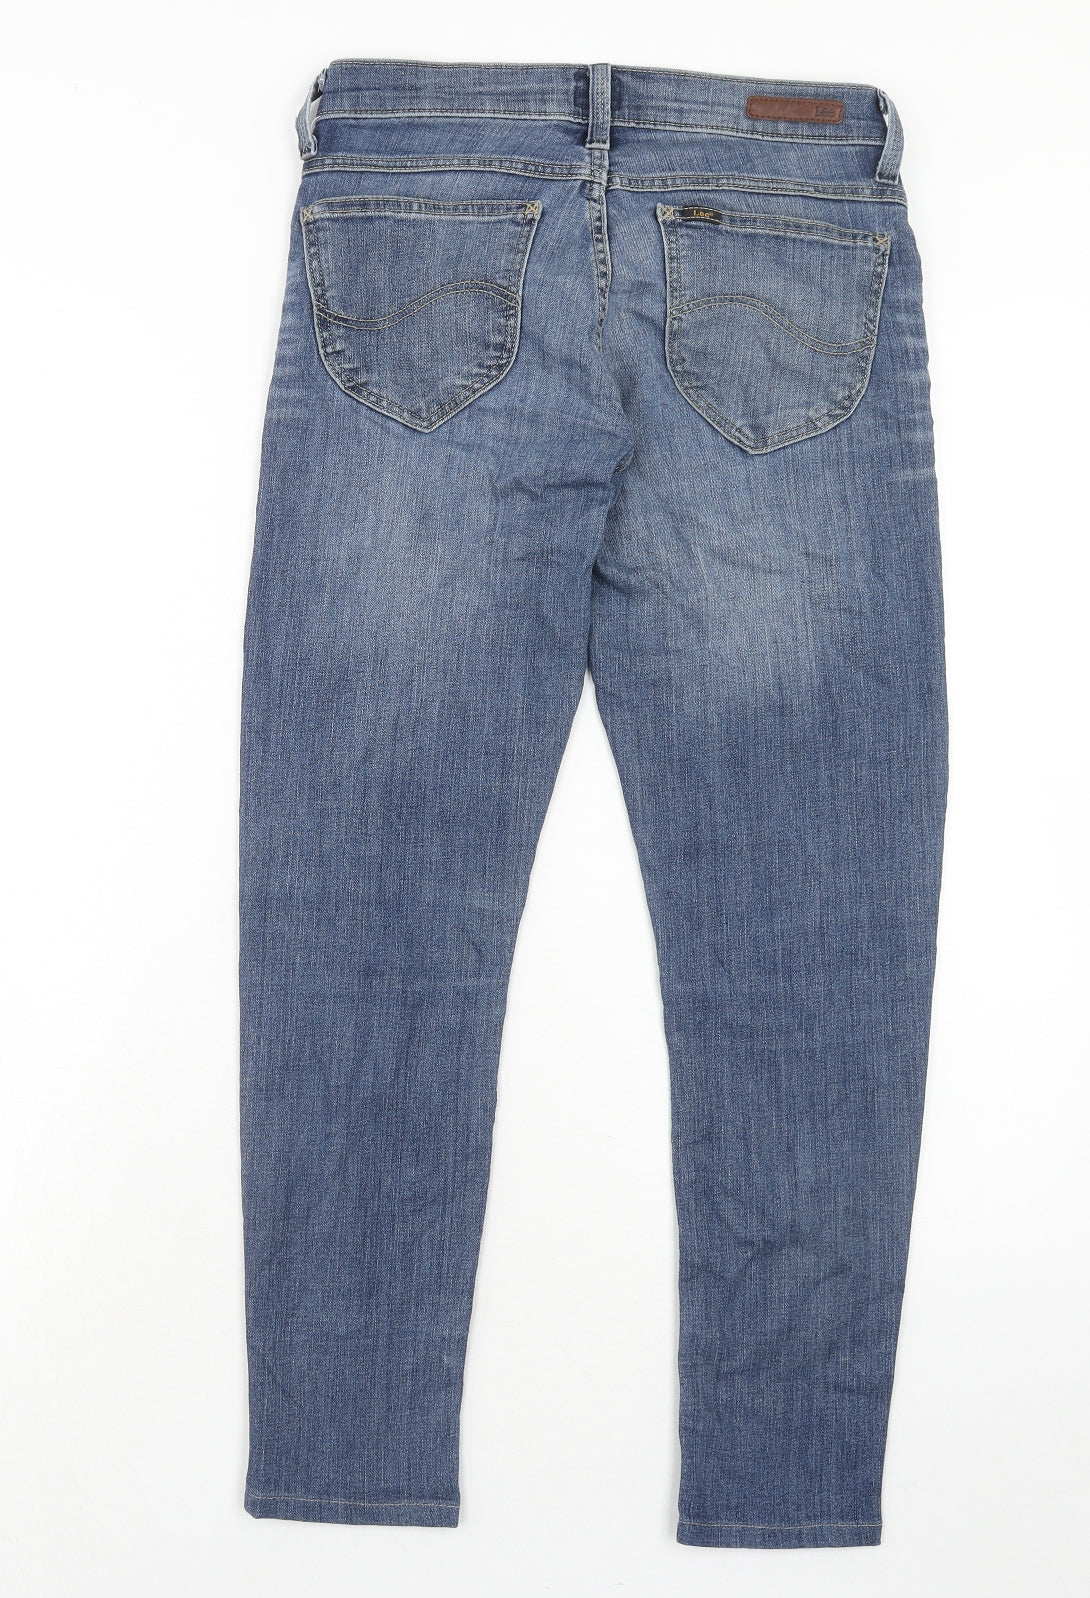 Lee Womens Blue Cotton Skinny Jeans Size 27 in L31 in Regular Zip